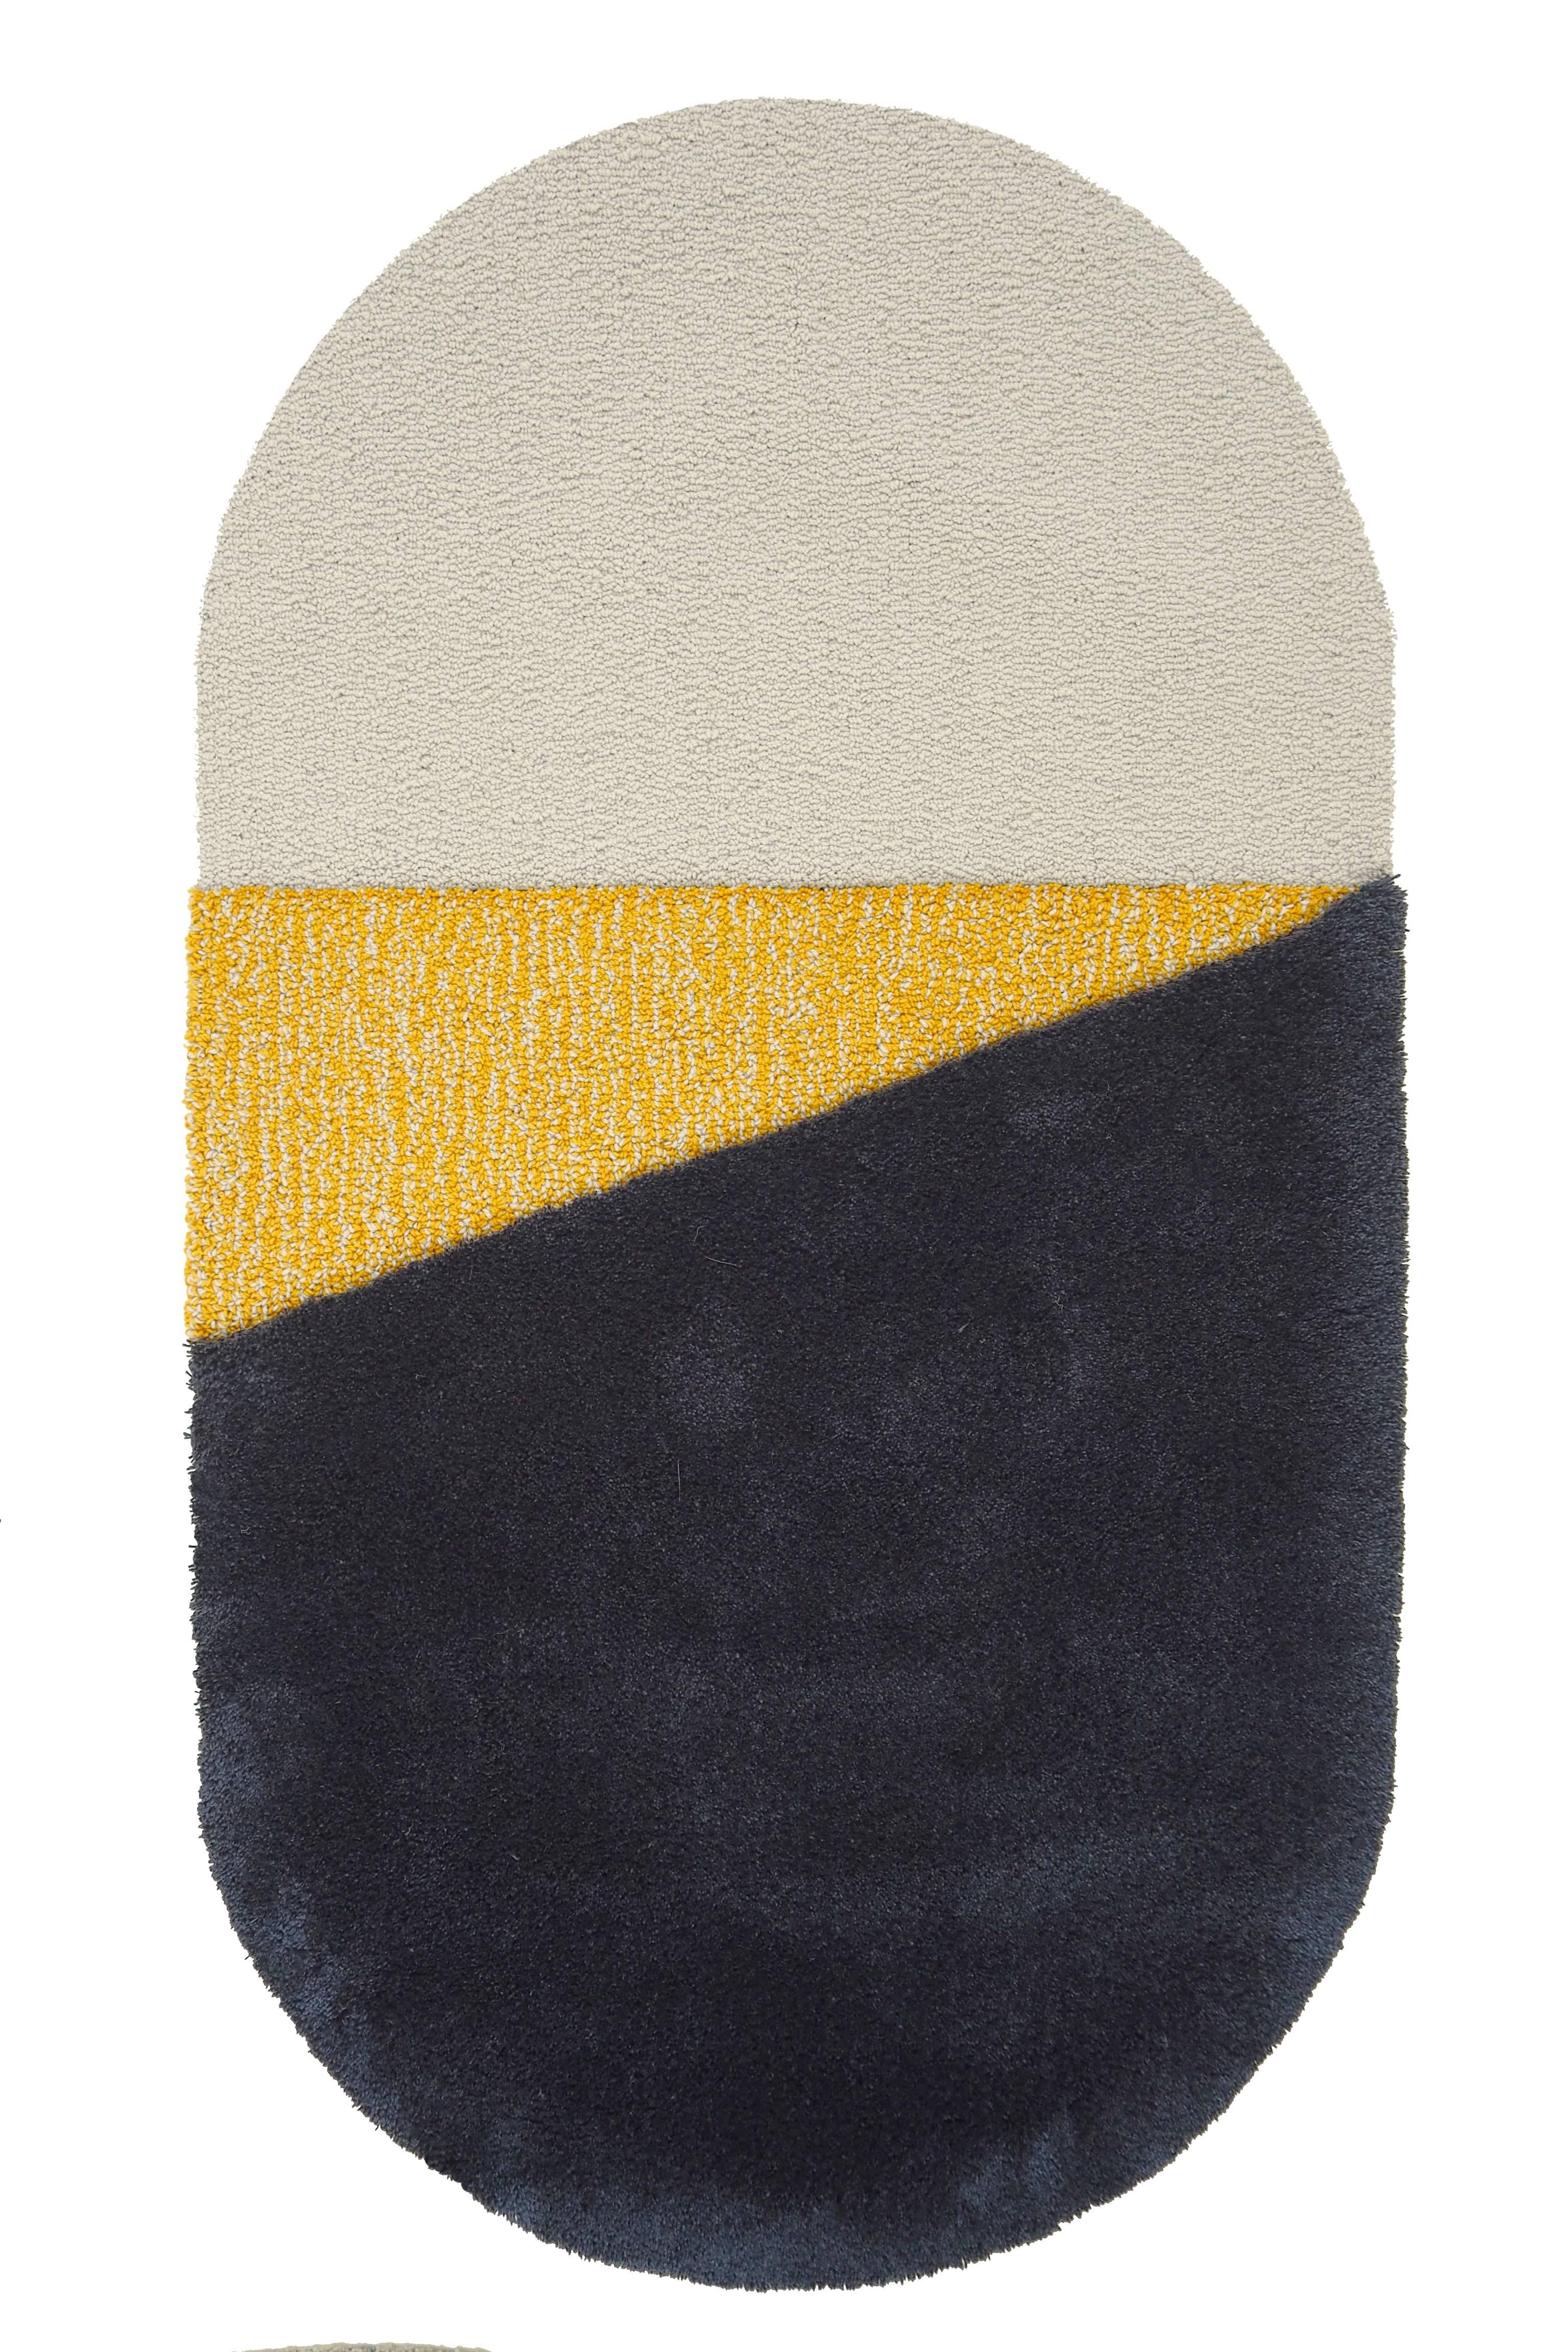 Contemporary Small Yellow Gray Oci Rug Triptych by Seraina Lareida